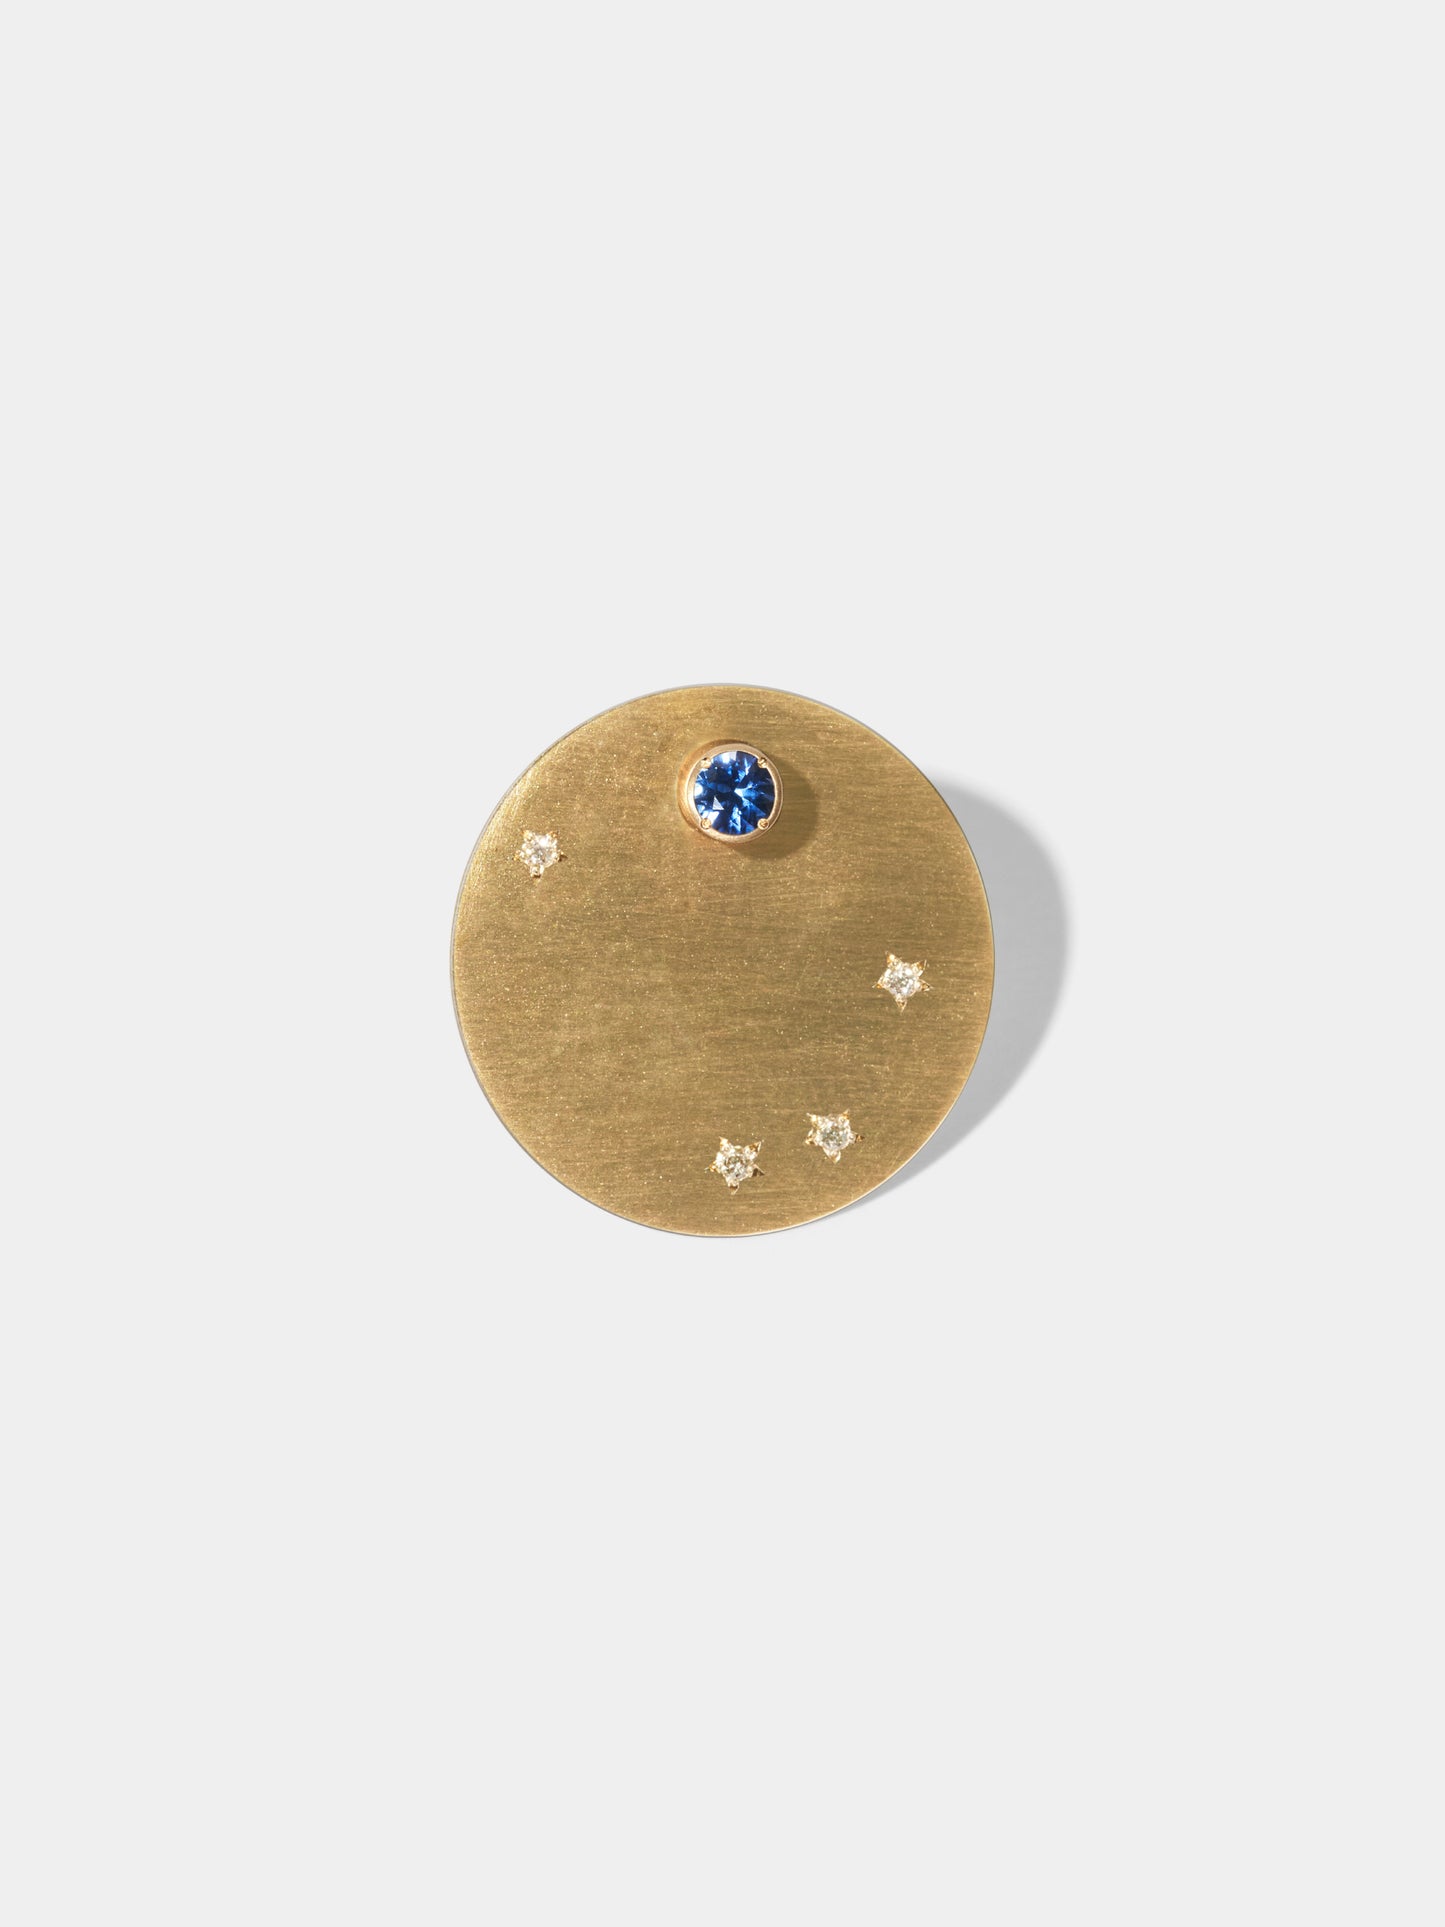 ASTERISM_Pierced Earring_Aries(牡羊座) / Sapphire